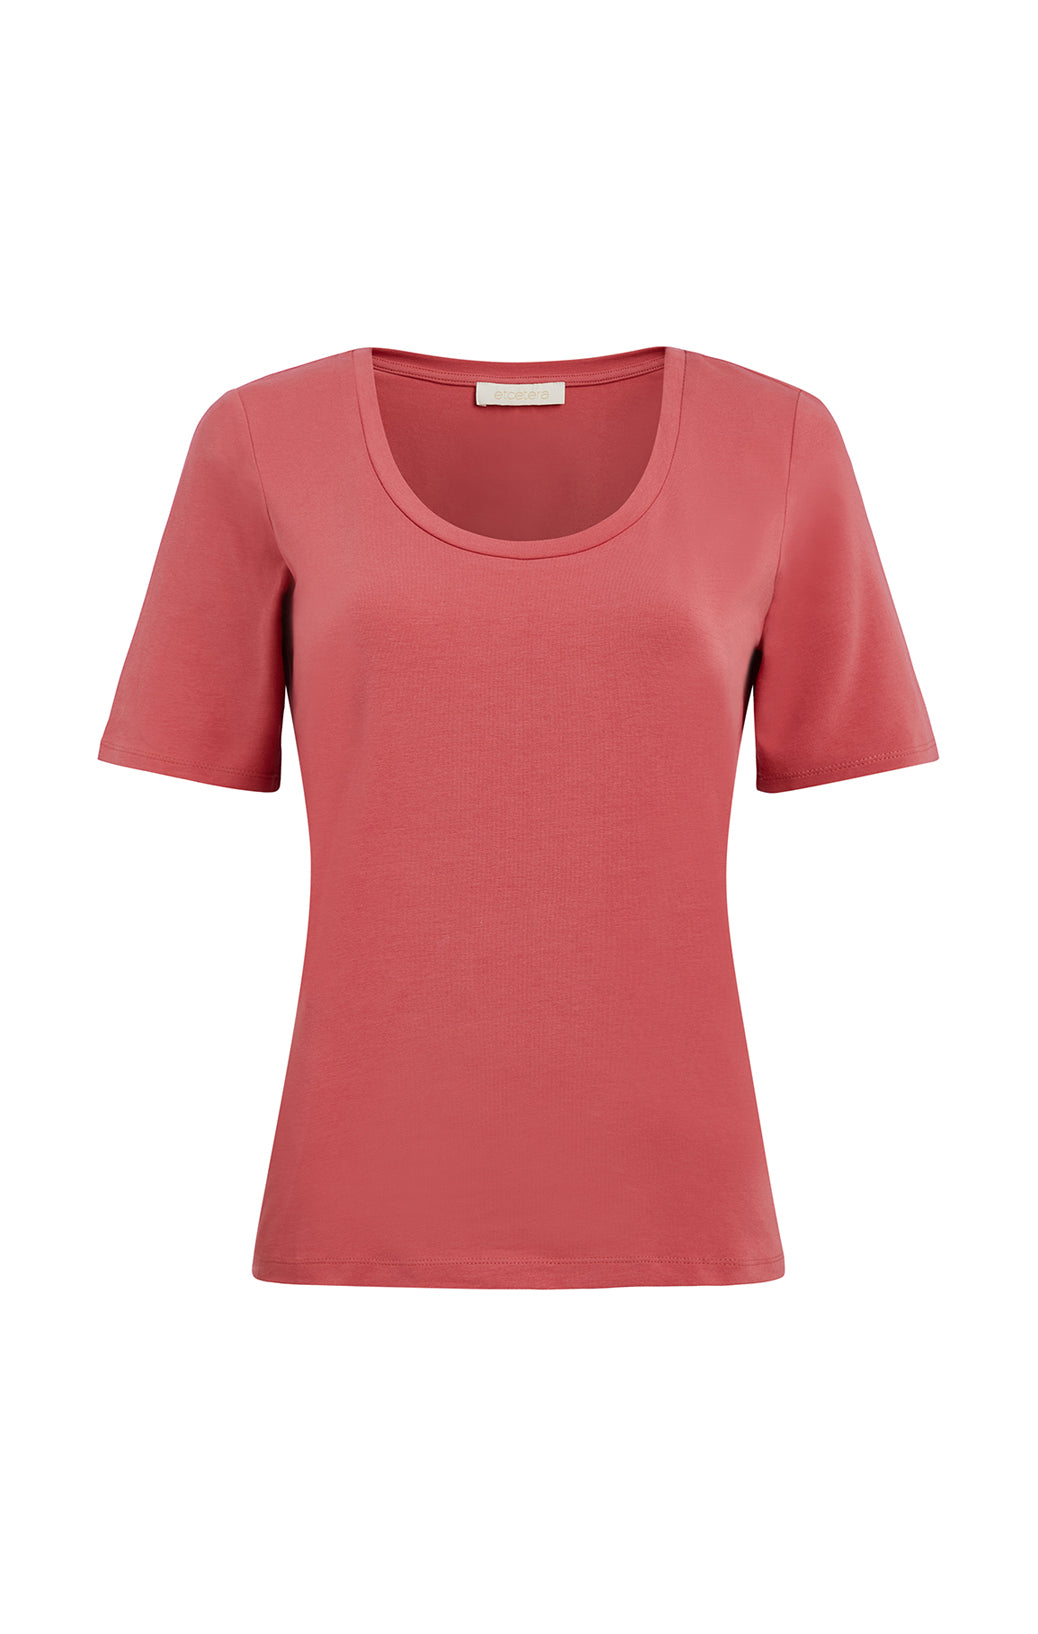 Malibu - Red Linen-Blend Knit Tank Top - Product Image